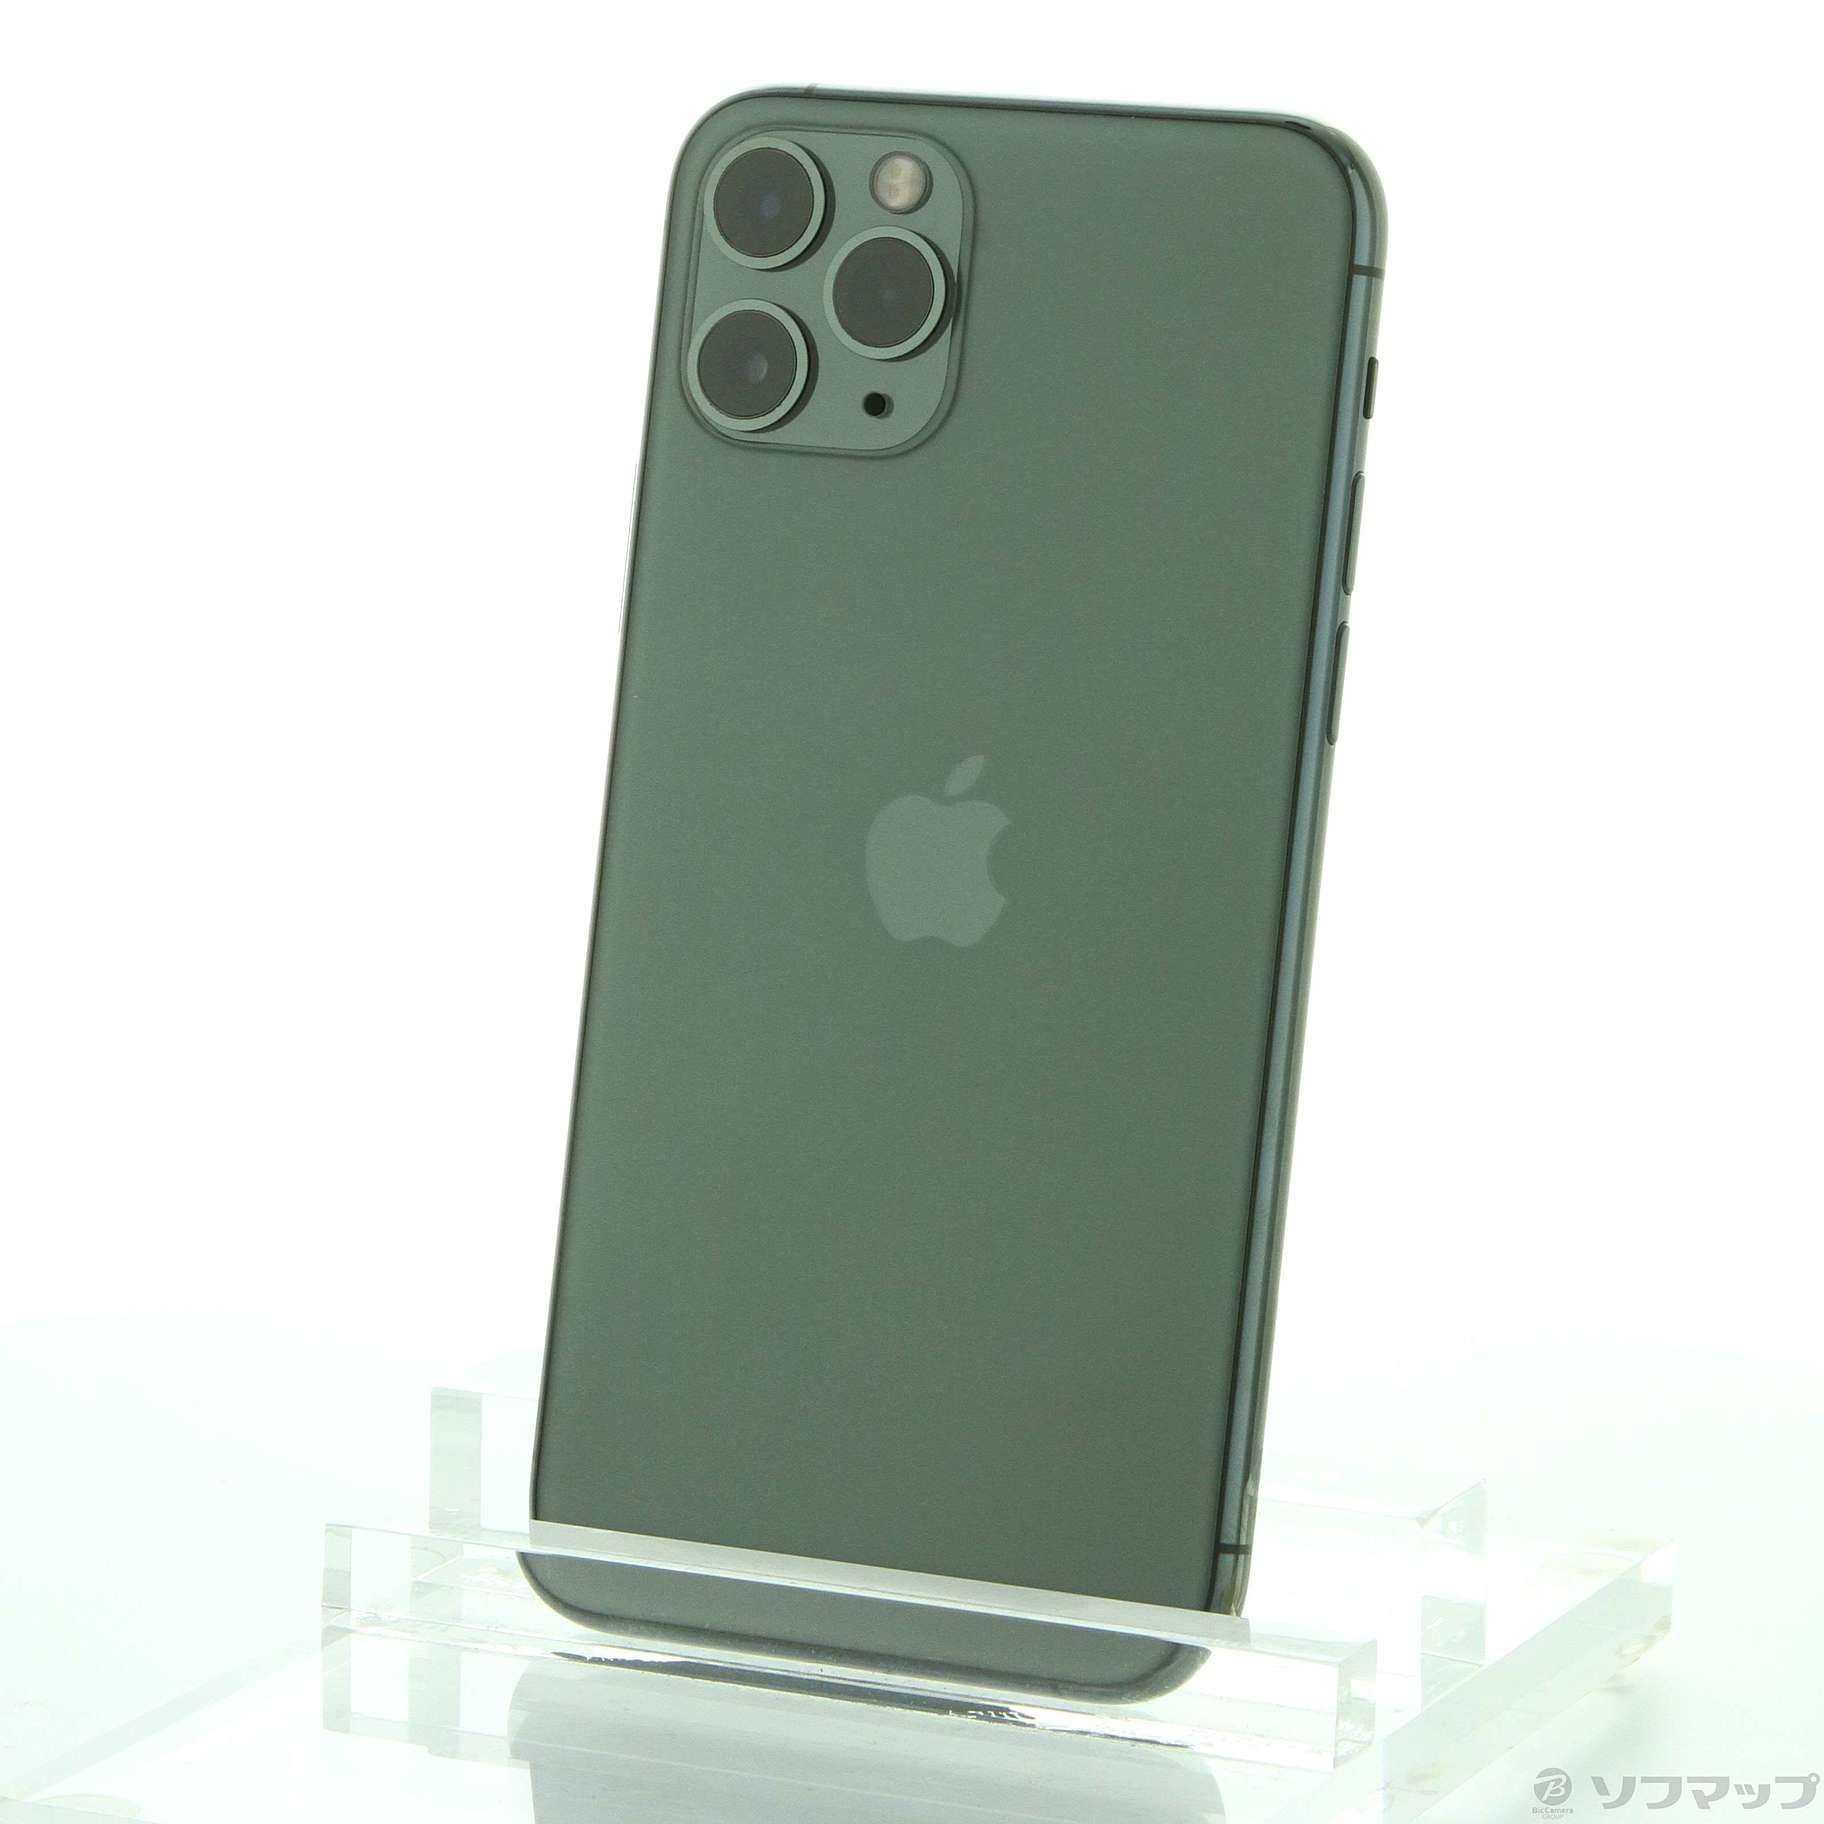 iPhone 11 Pro 256GB SIMフリー [ミッドナイトグリーン] 中古(白ロム 